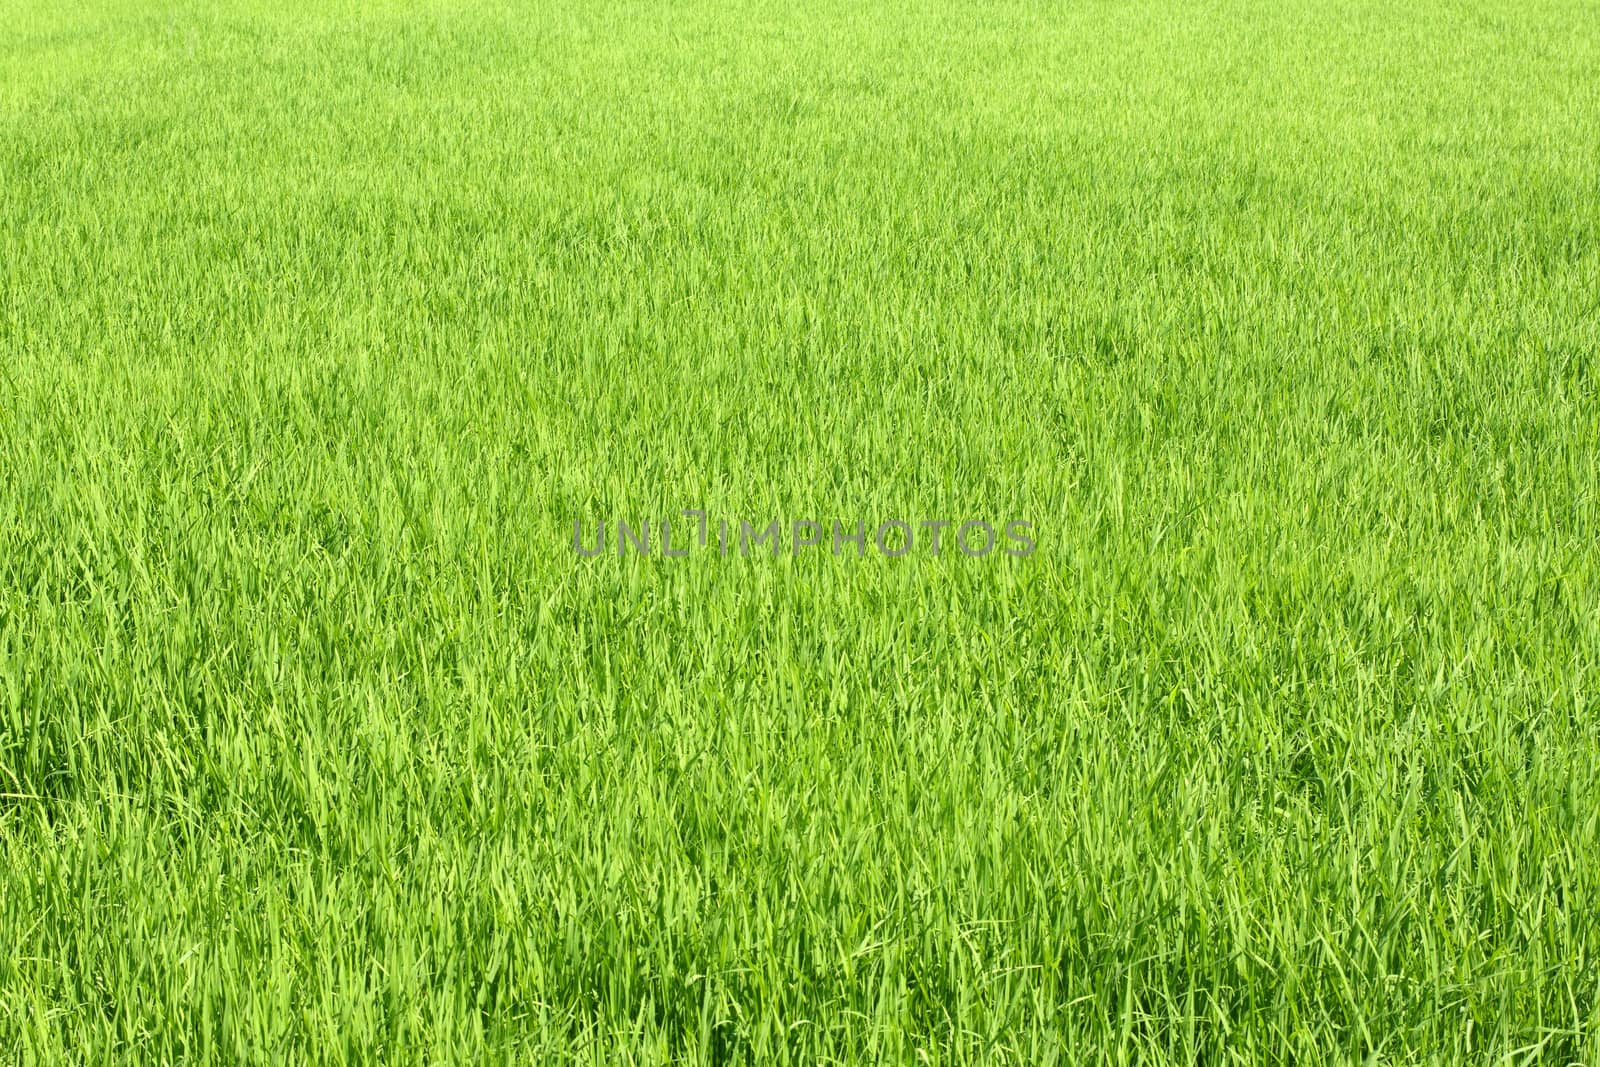 Green Rice field in Thailand